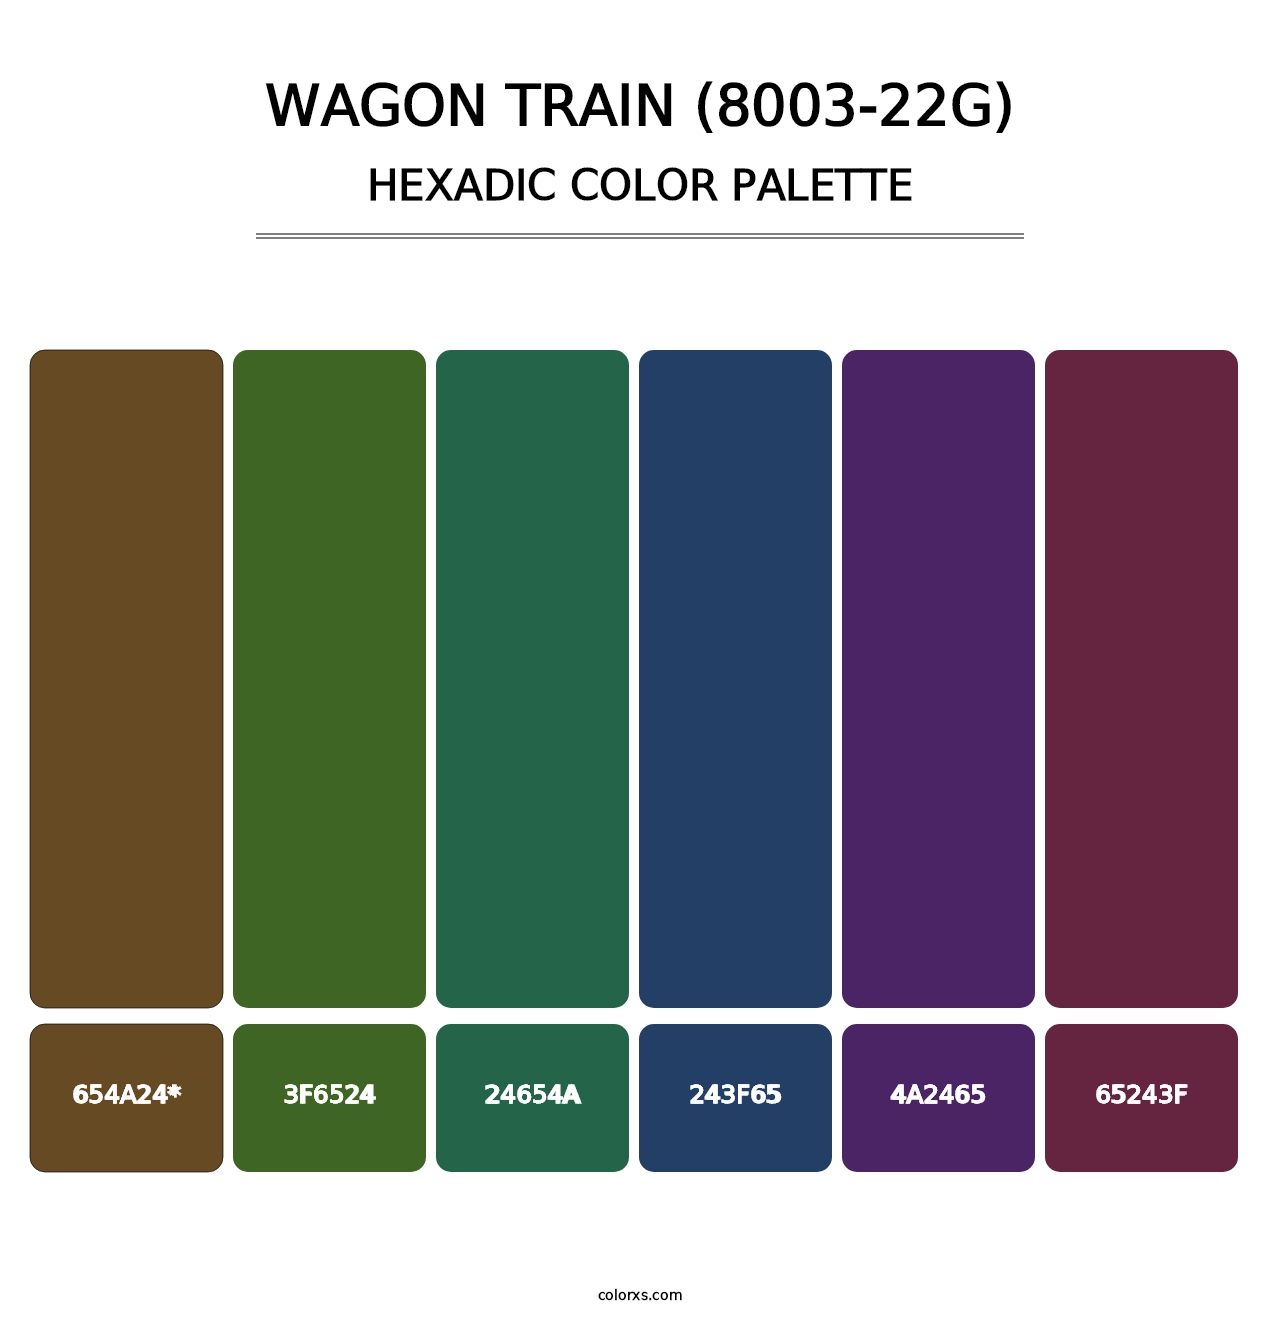 Wagon Train (8003-22G) - Hexadic Color Palette